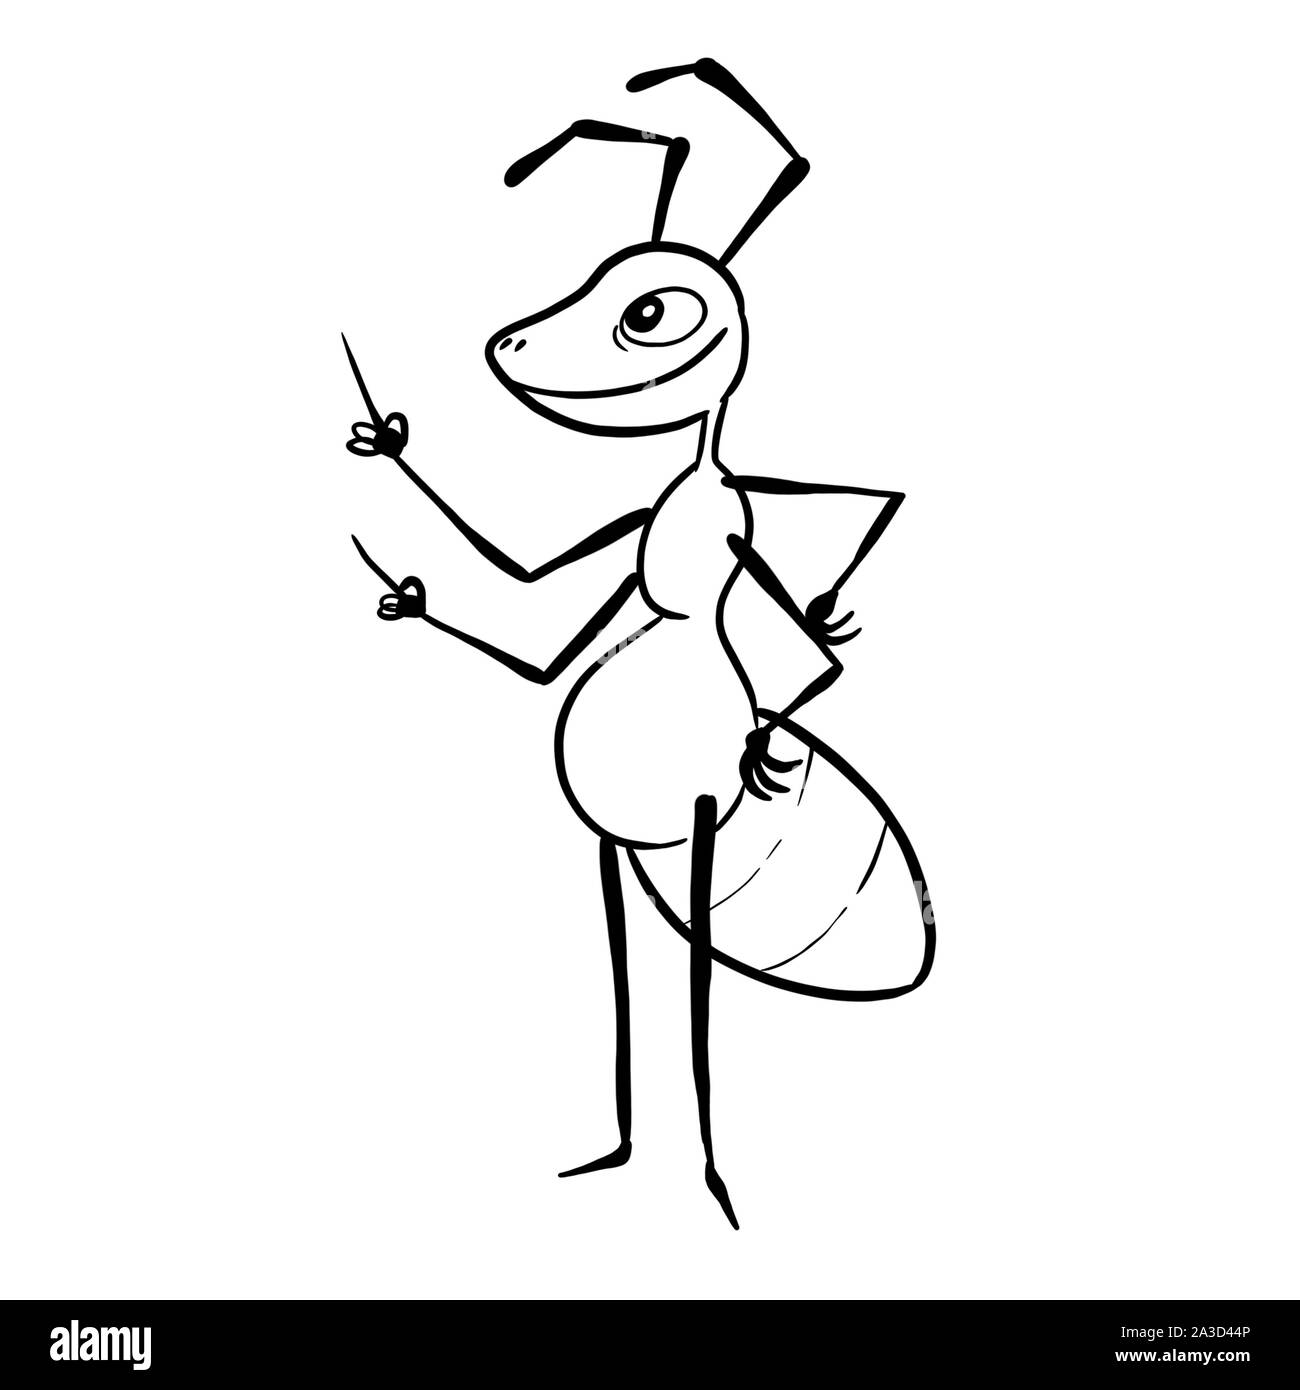 an ant pointing upwards mascot illustration Stock Photo